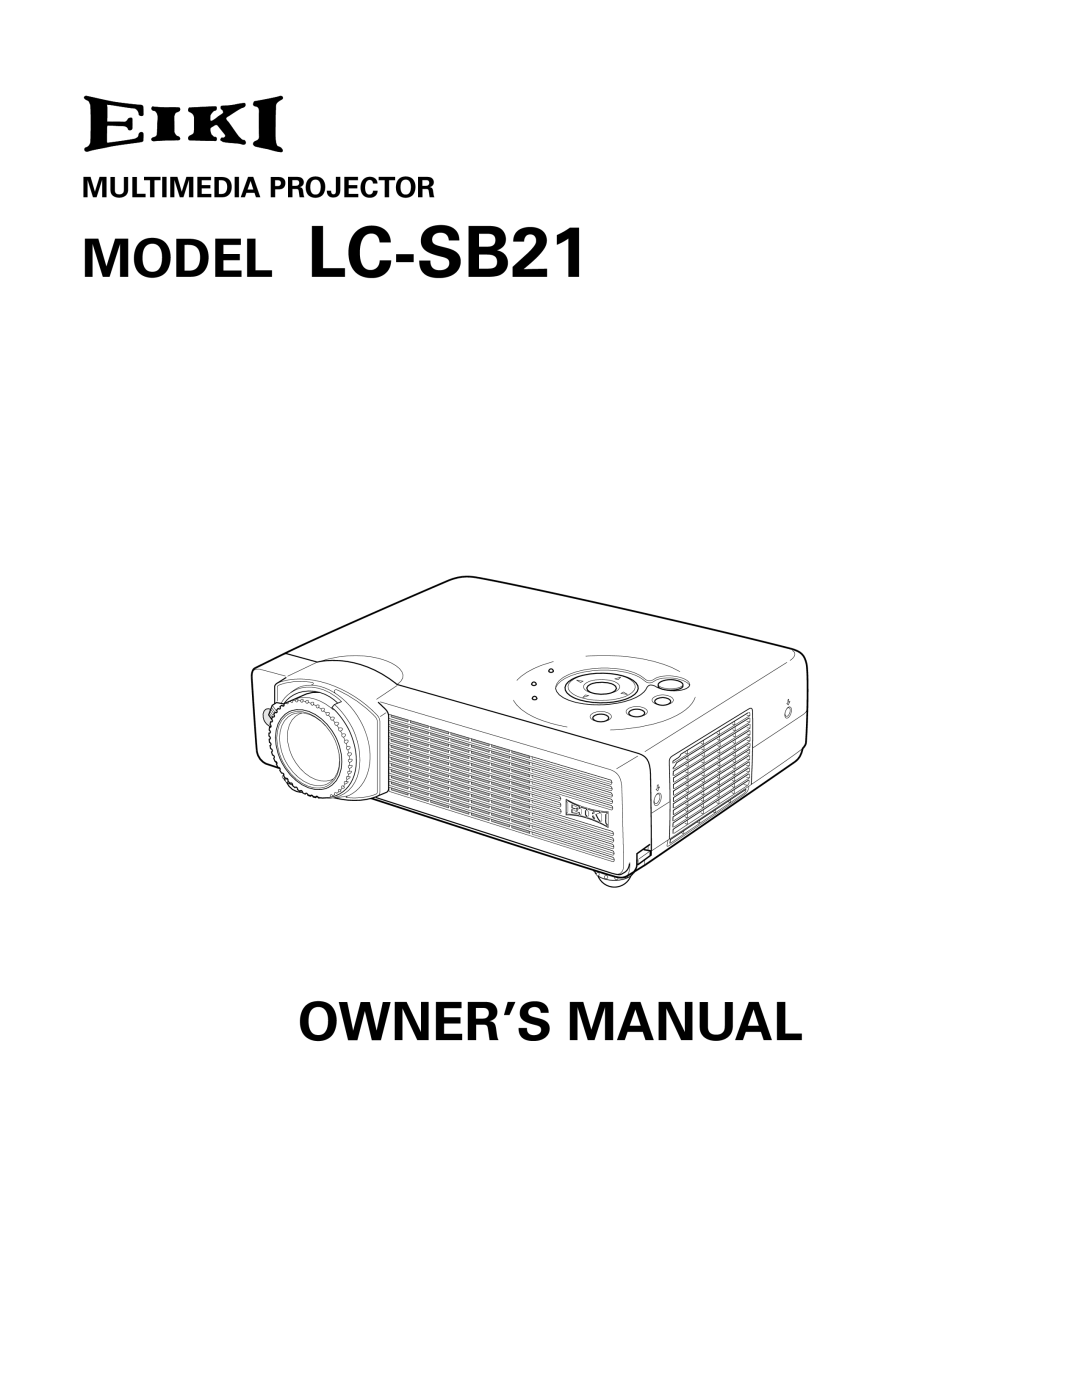 Eiki owner manual Multimedia Projector, MODEL LC-SB21 